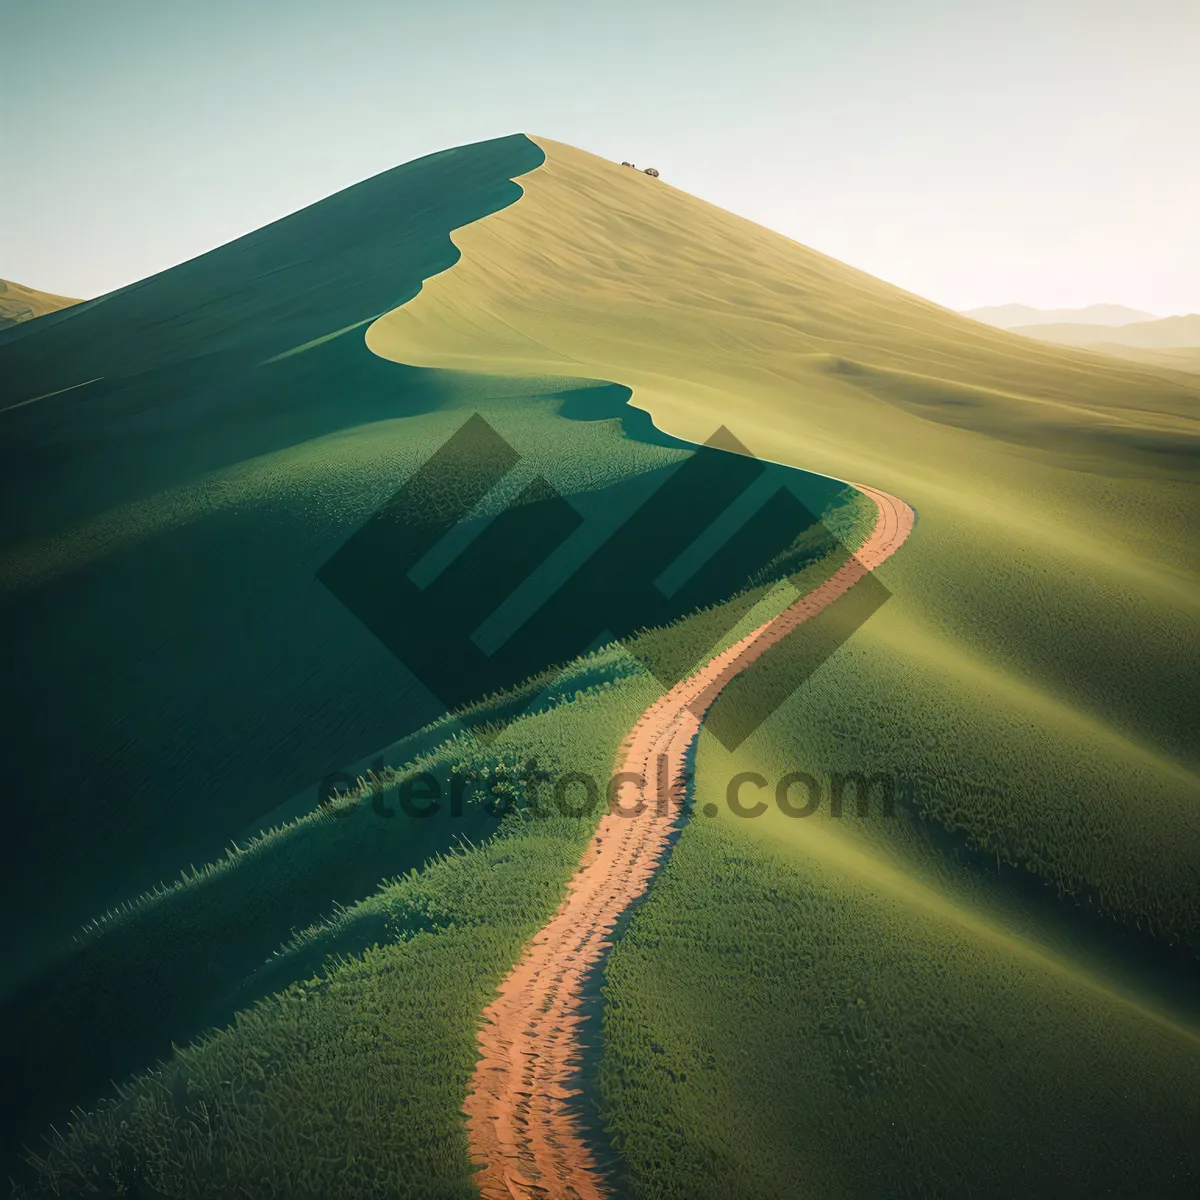 Picture of Majestic Desert Dunes: A Glimpse of Morocco's Sandy Landscape